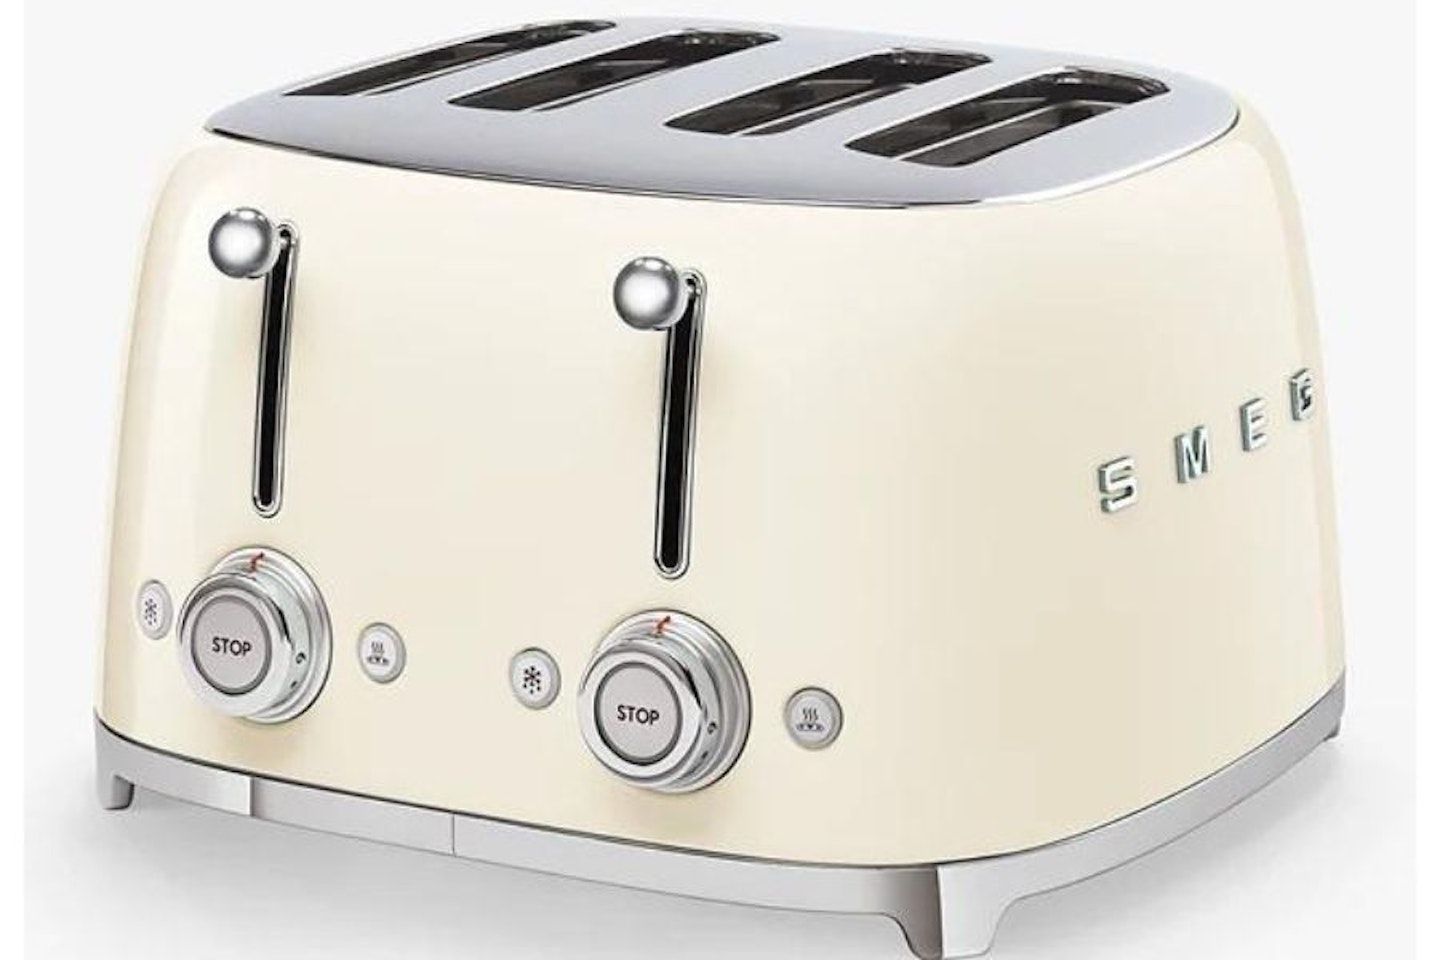 Smeg - best energy efficient toasters